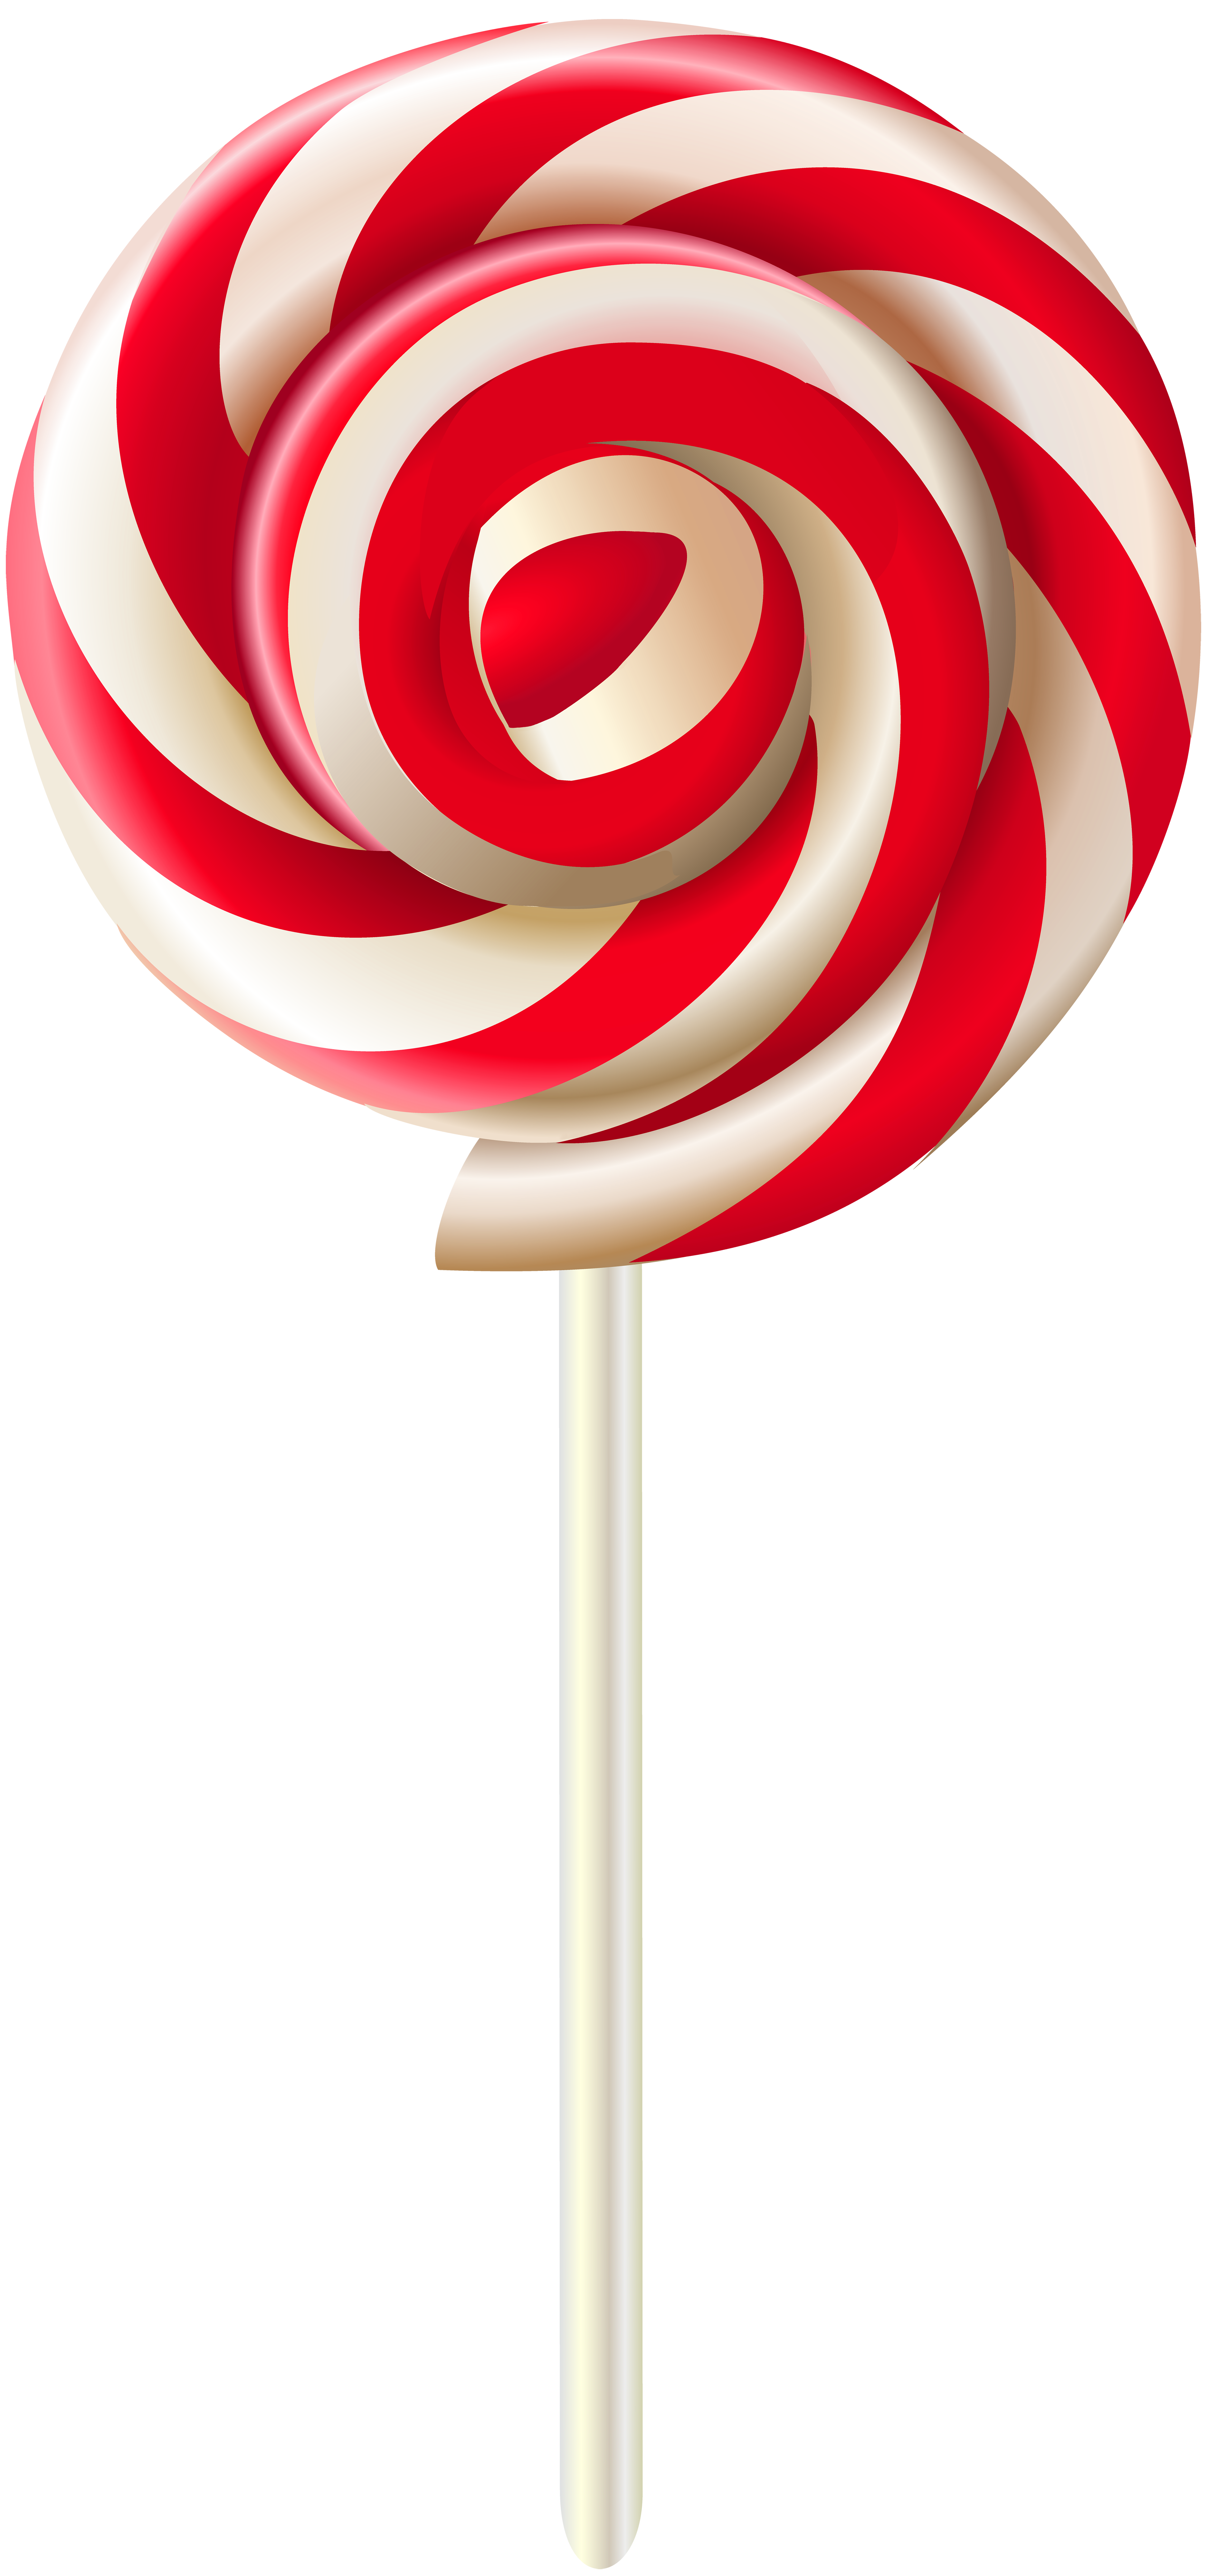 Red Swirl Lollipop Transparent PNG Clip Art Image